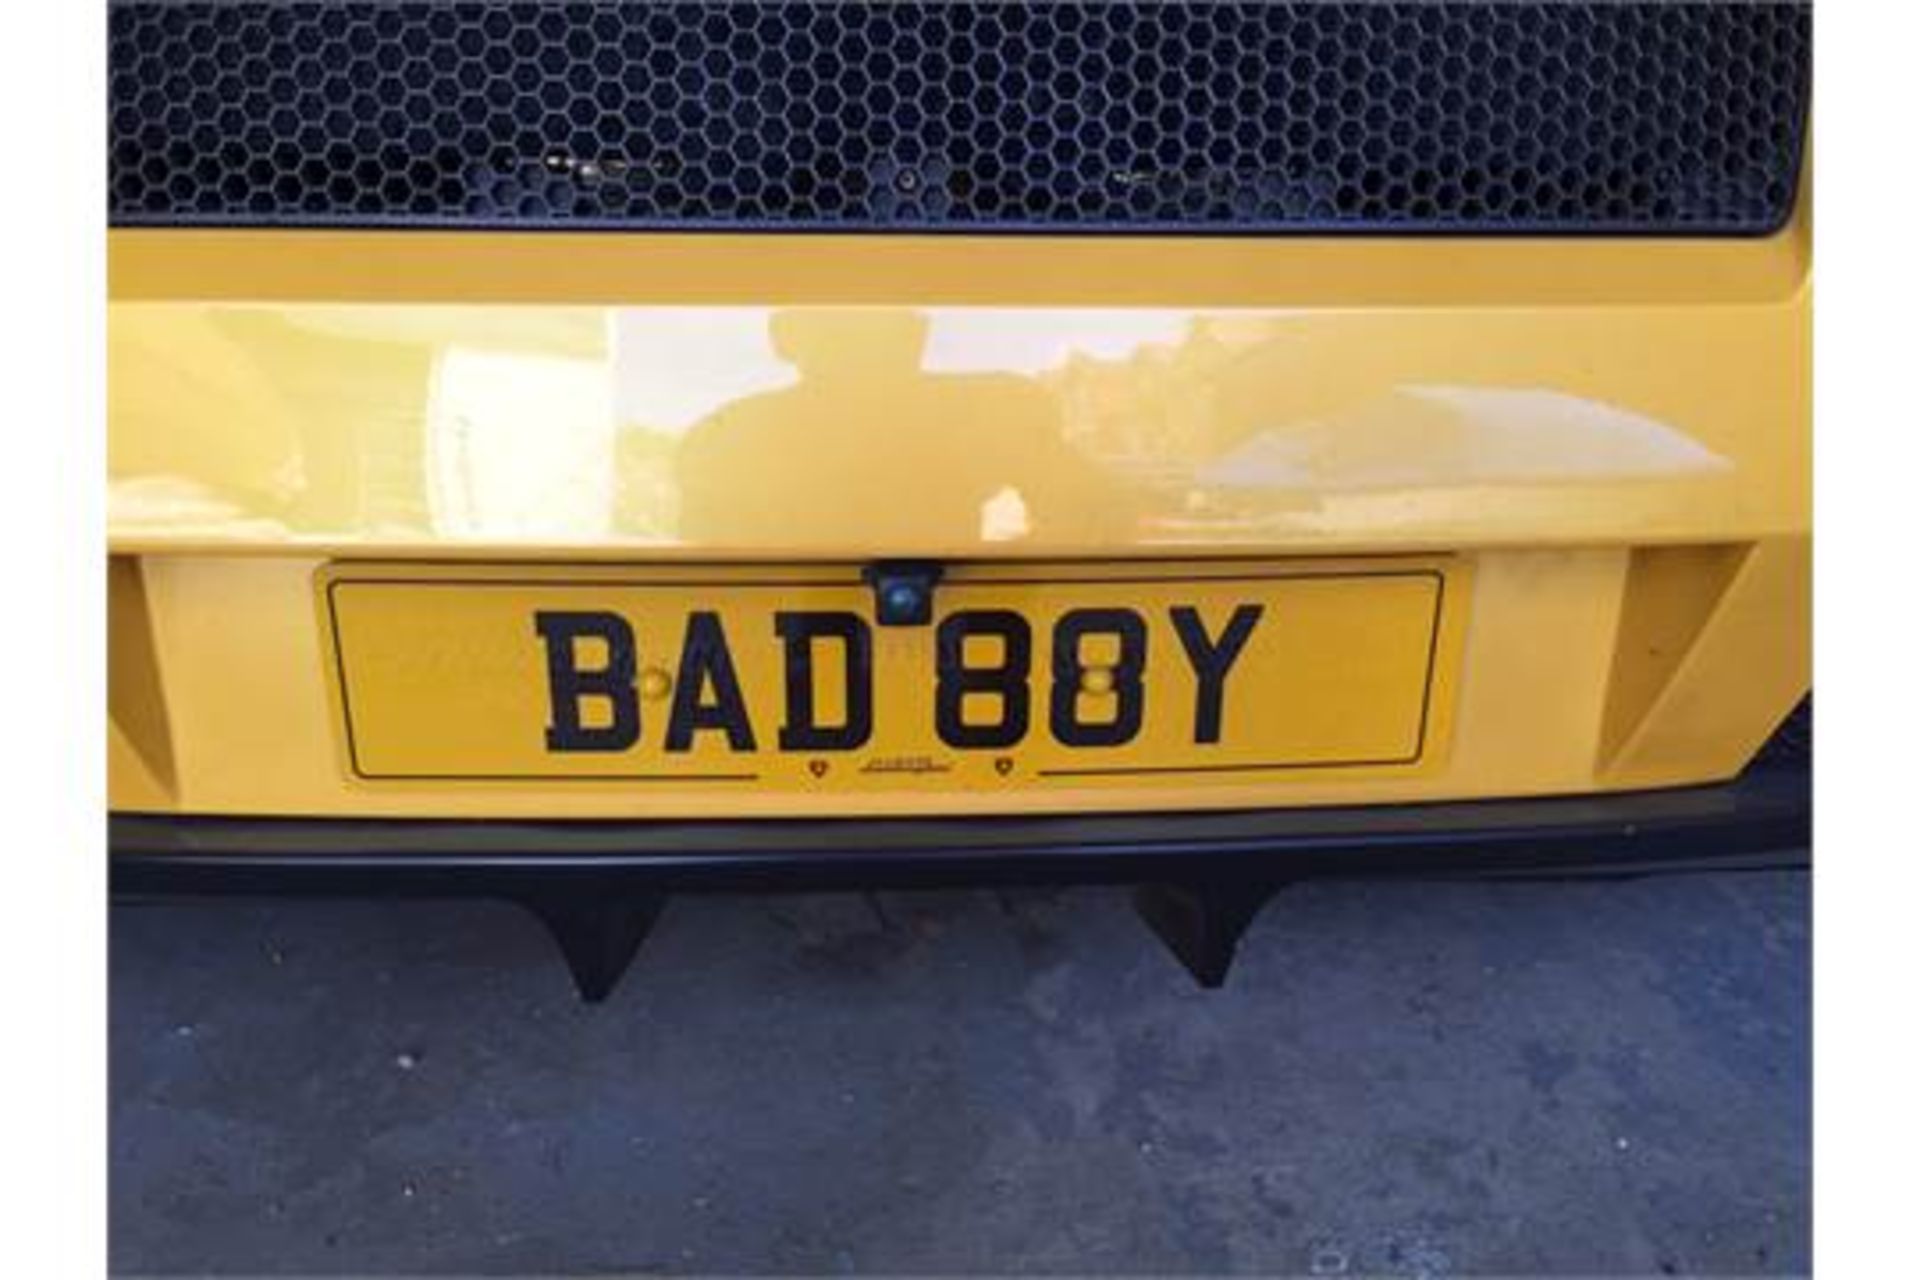 Cherished Vehicle Registration Plate... BAD 88Y (BAD BOY) - Image 2 of 2